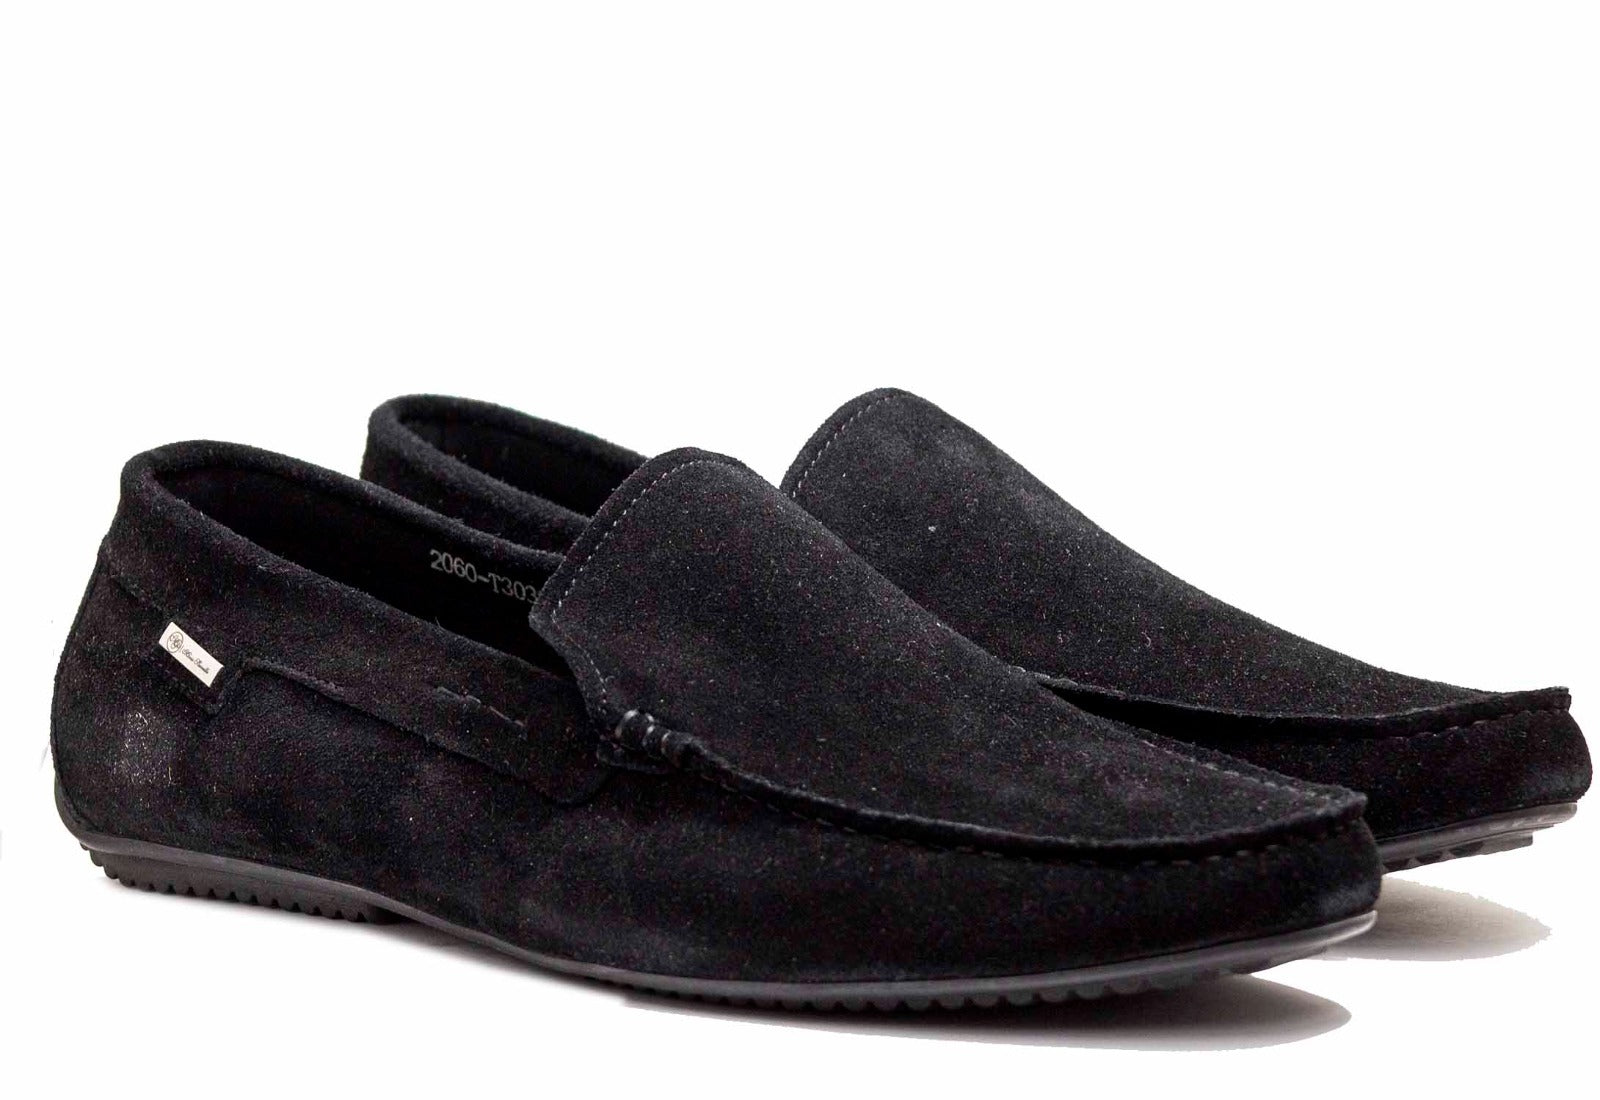 Mario Samello Men's Black Suede Loafer 2060-T303